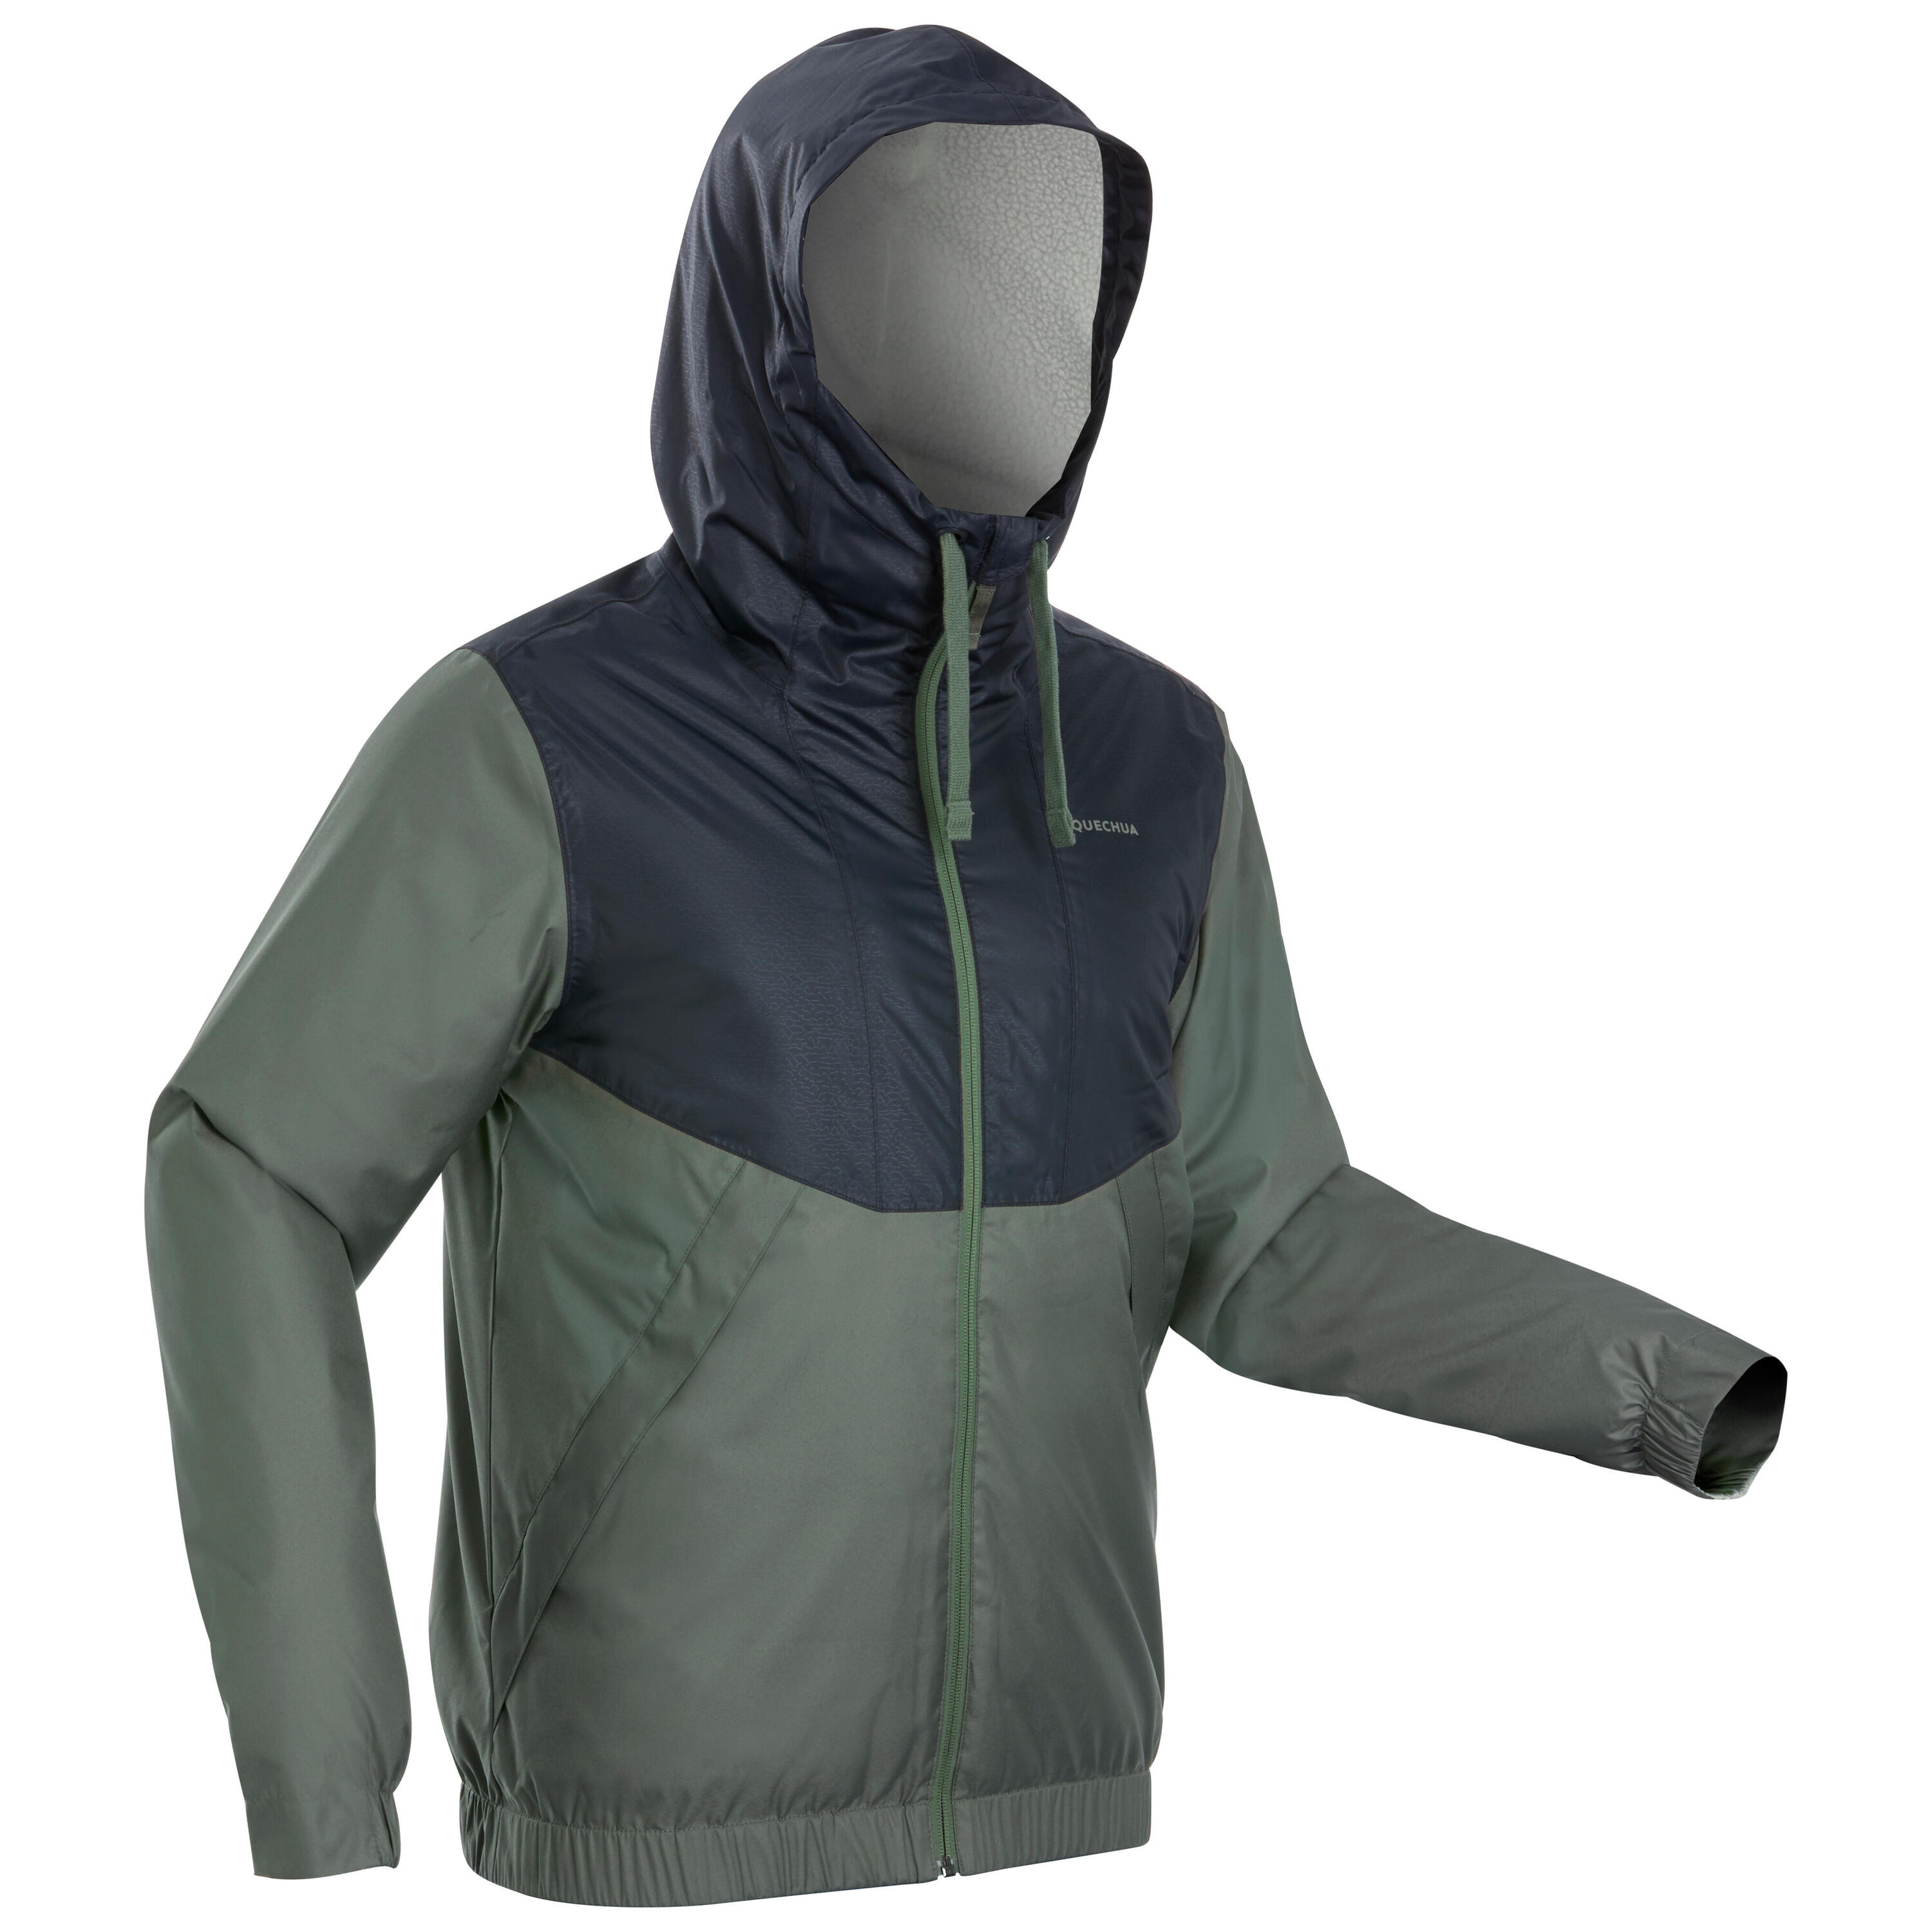 Men’s hiking waterproof winter jacket - SH100 -5°C 4/11